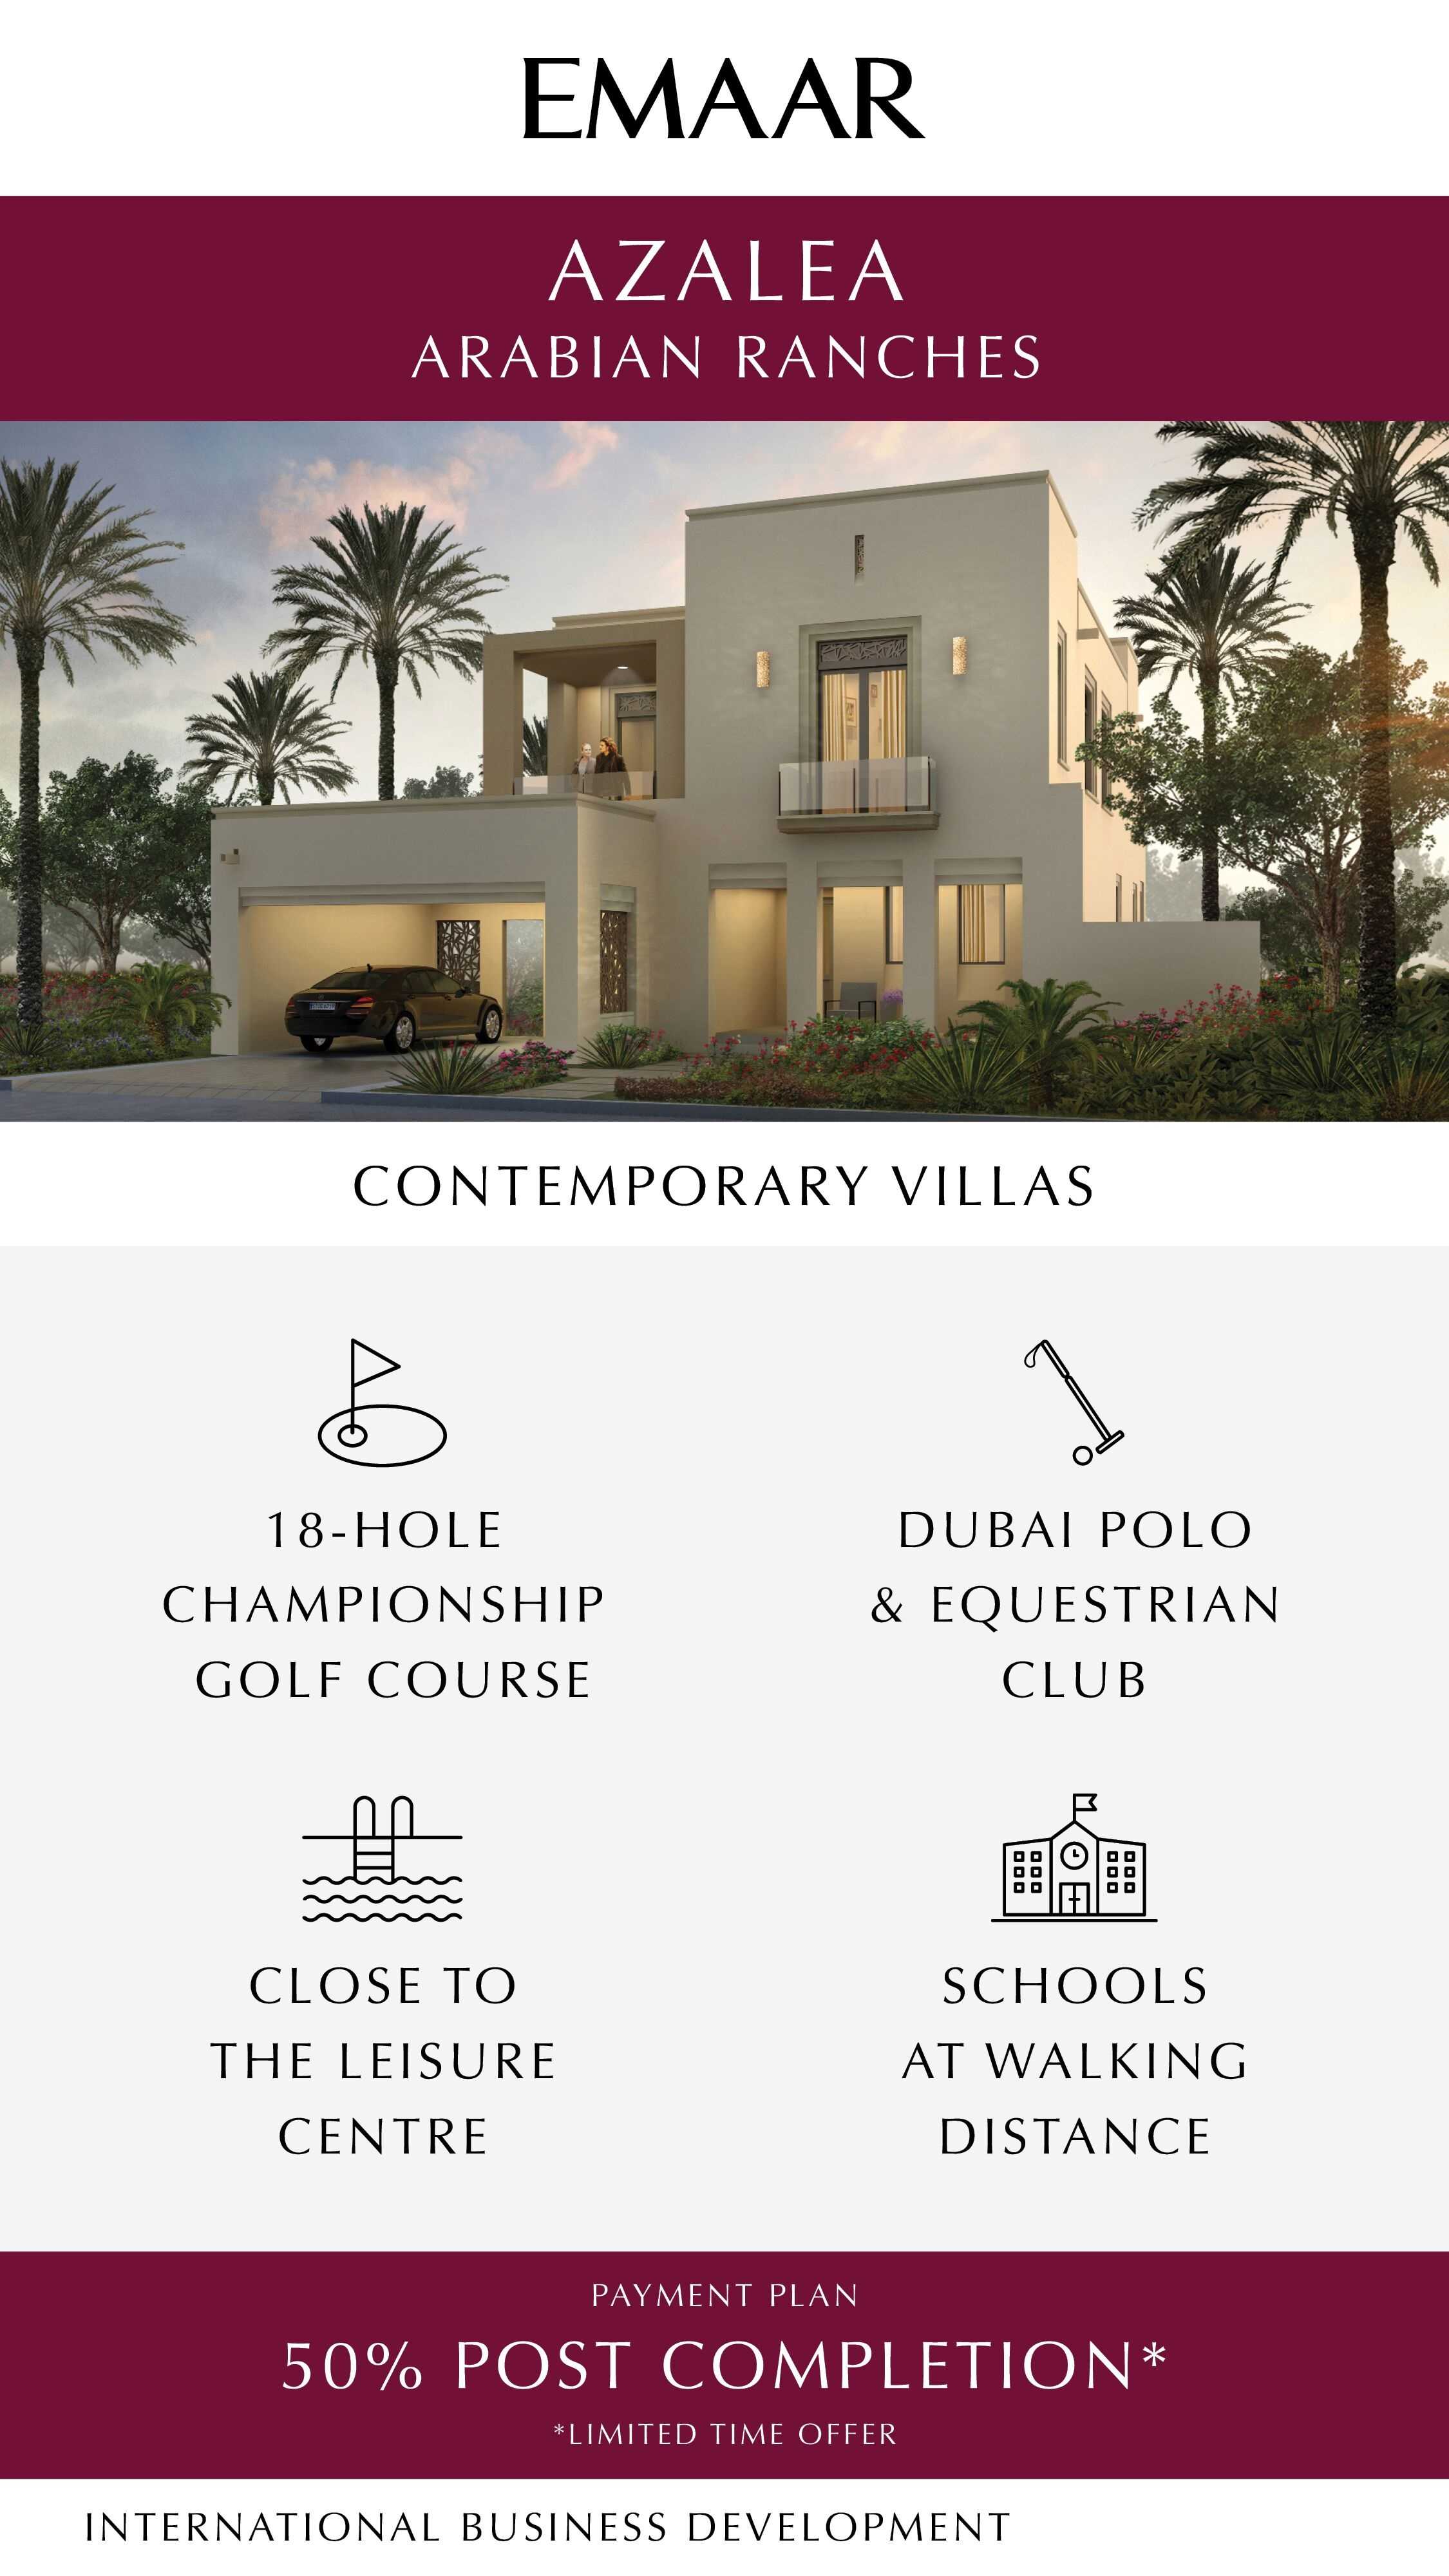 Azalea Villas by Emaar Properties at Arabian Ranches in Dubai Update